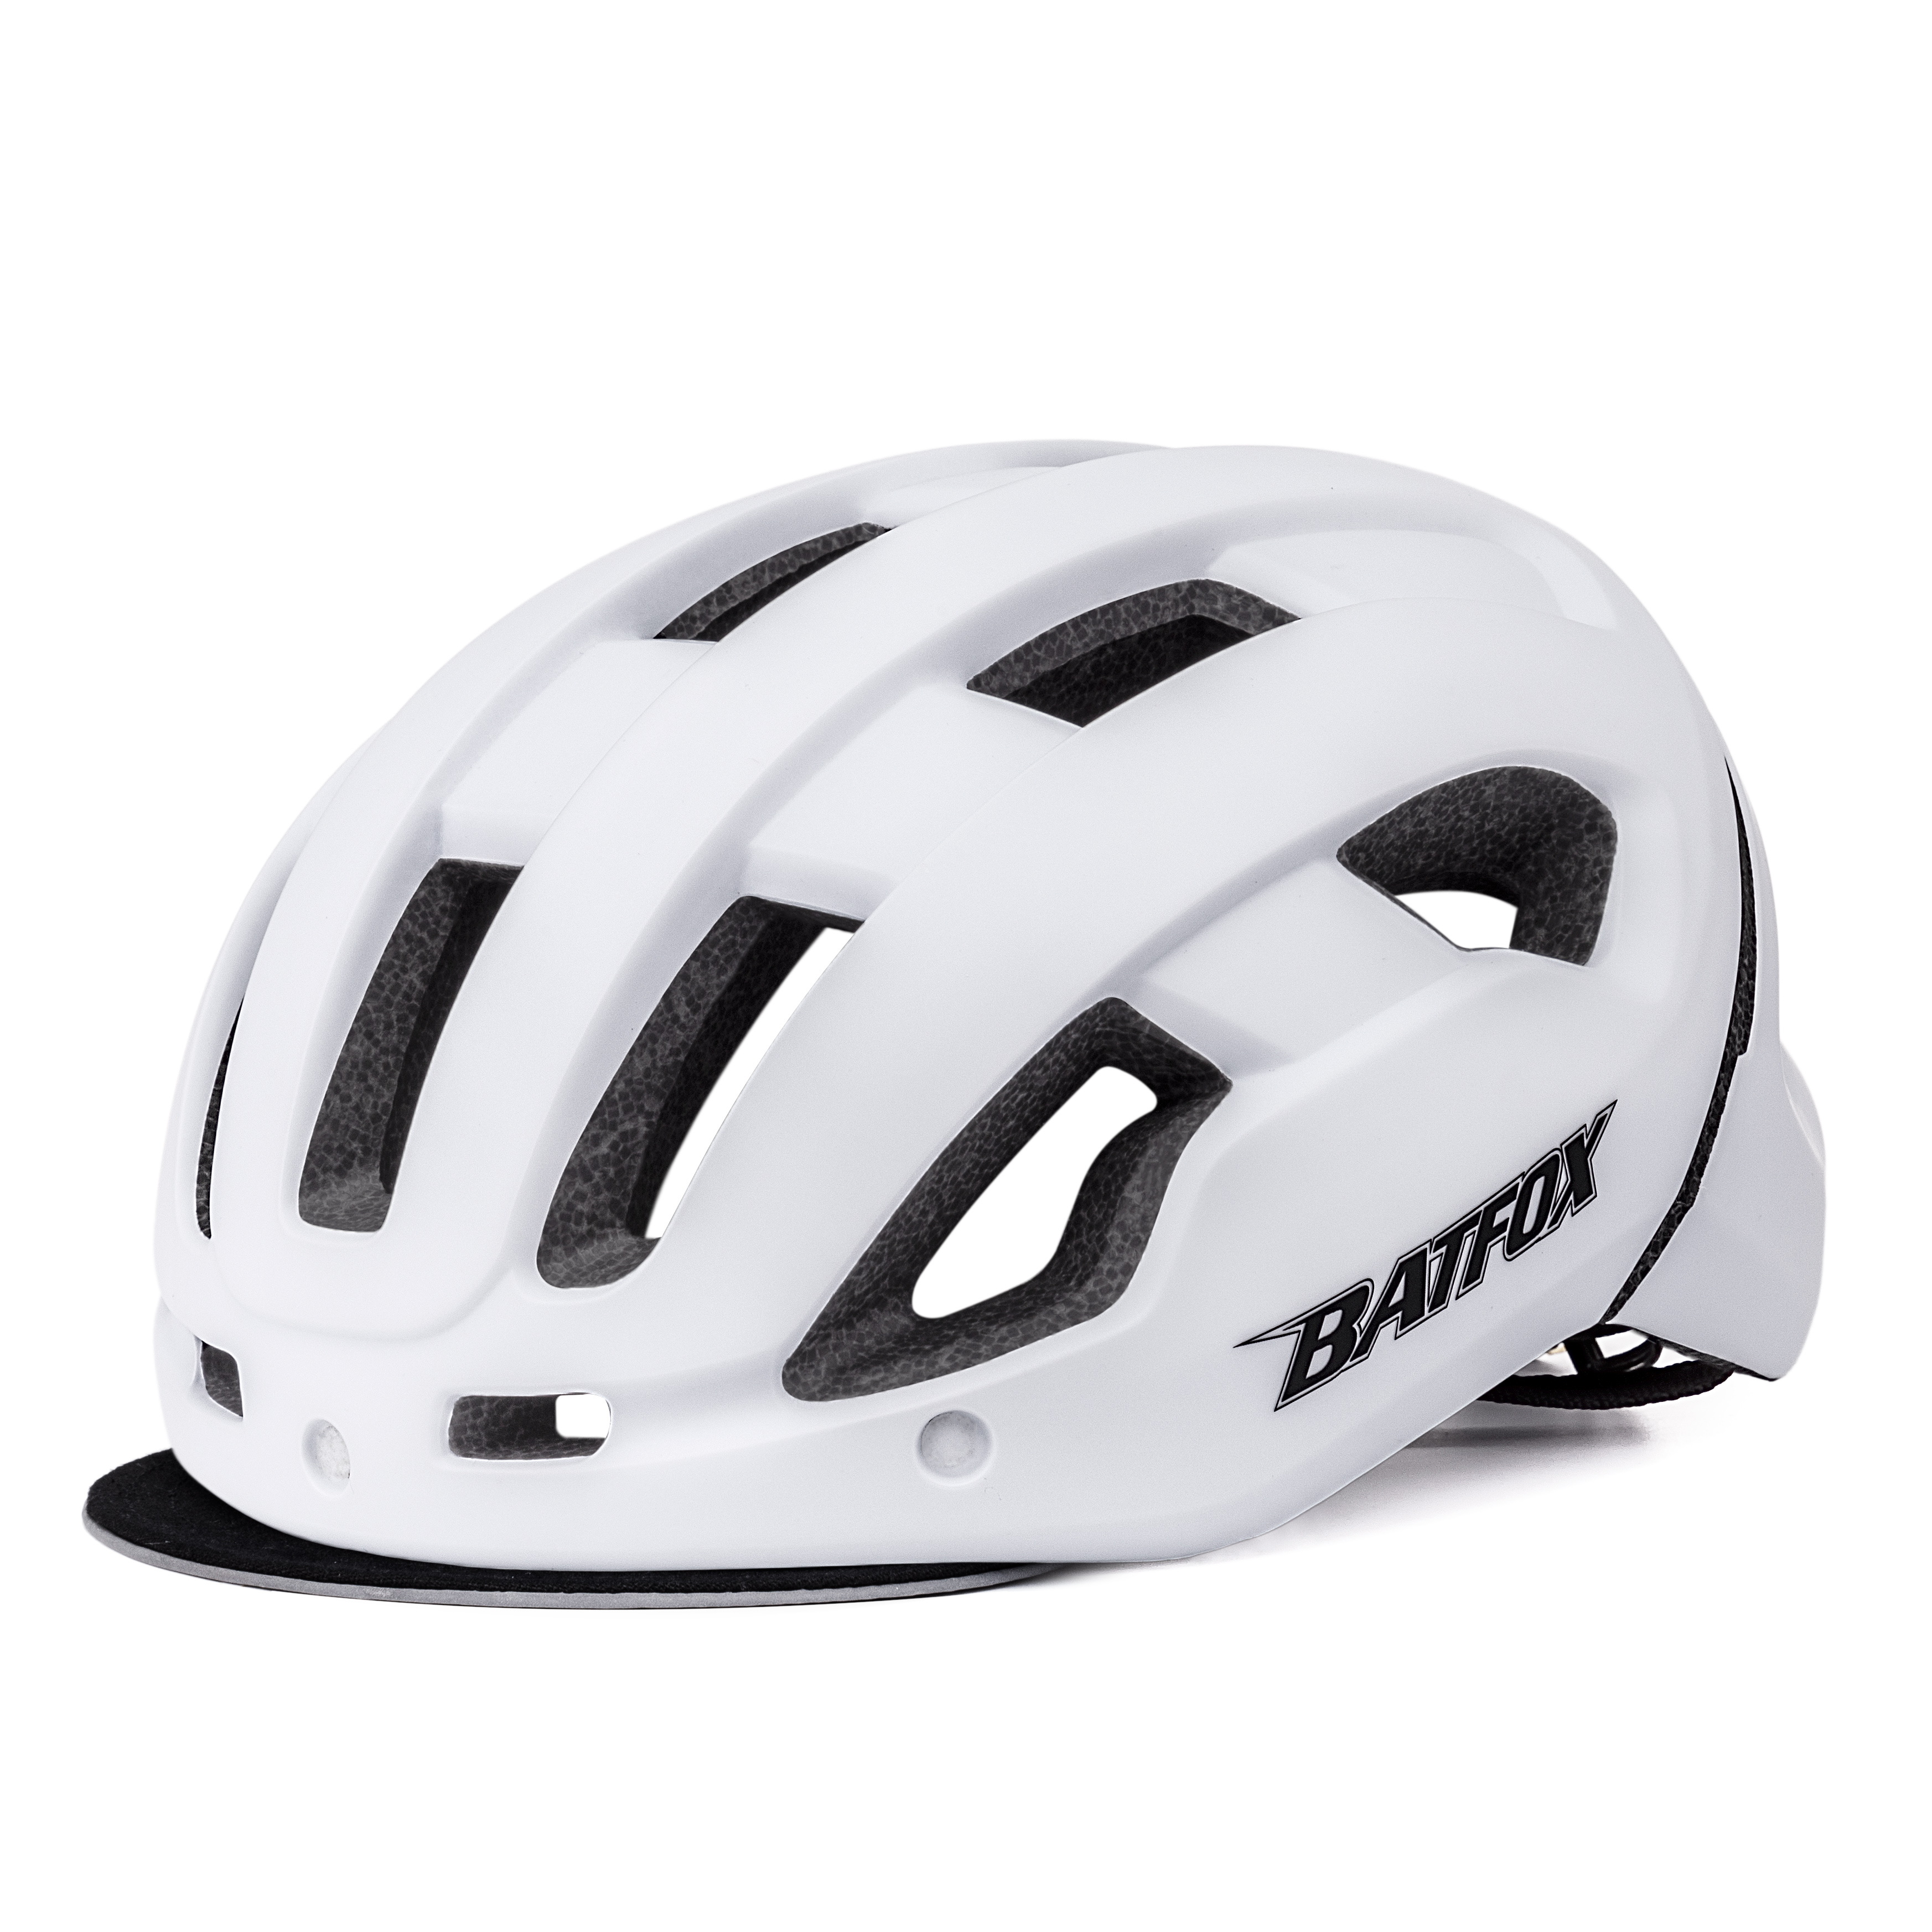 BATFOX自行车头盔城市头盔山地车一体成型骑行头盔带警示灯安全帽